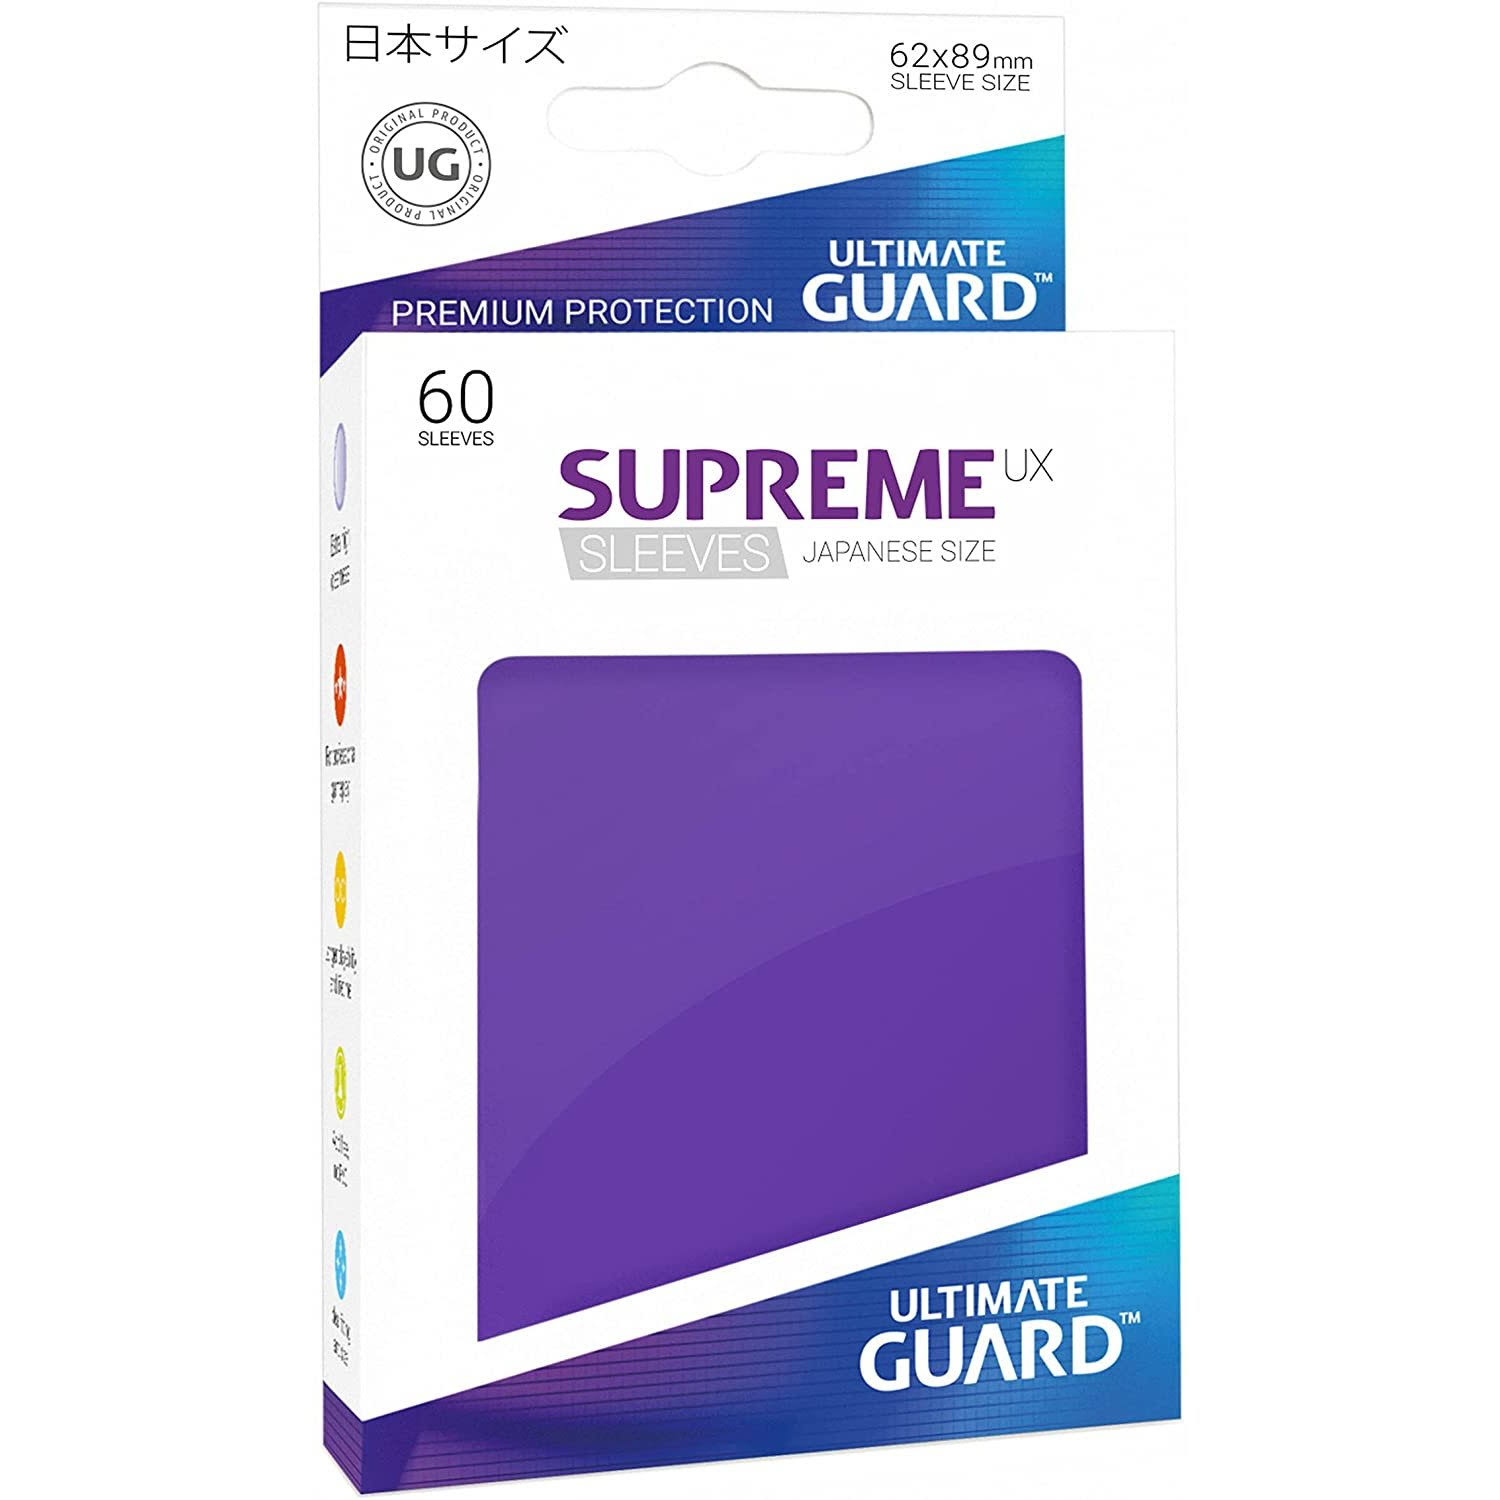 Ultimate Guard Supreme UX Sleeves - Purple